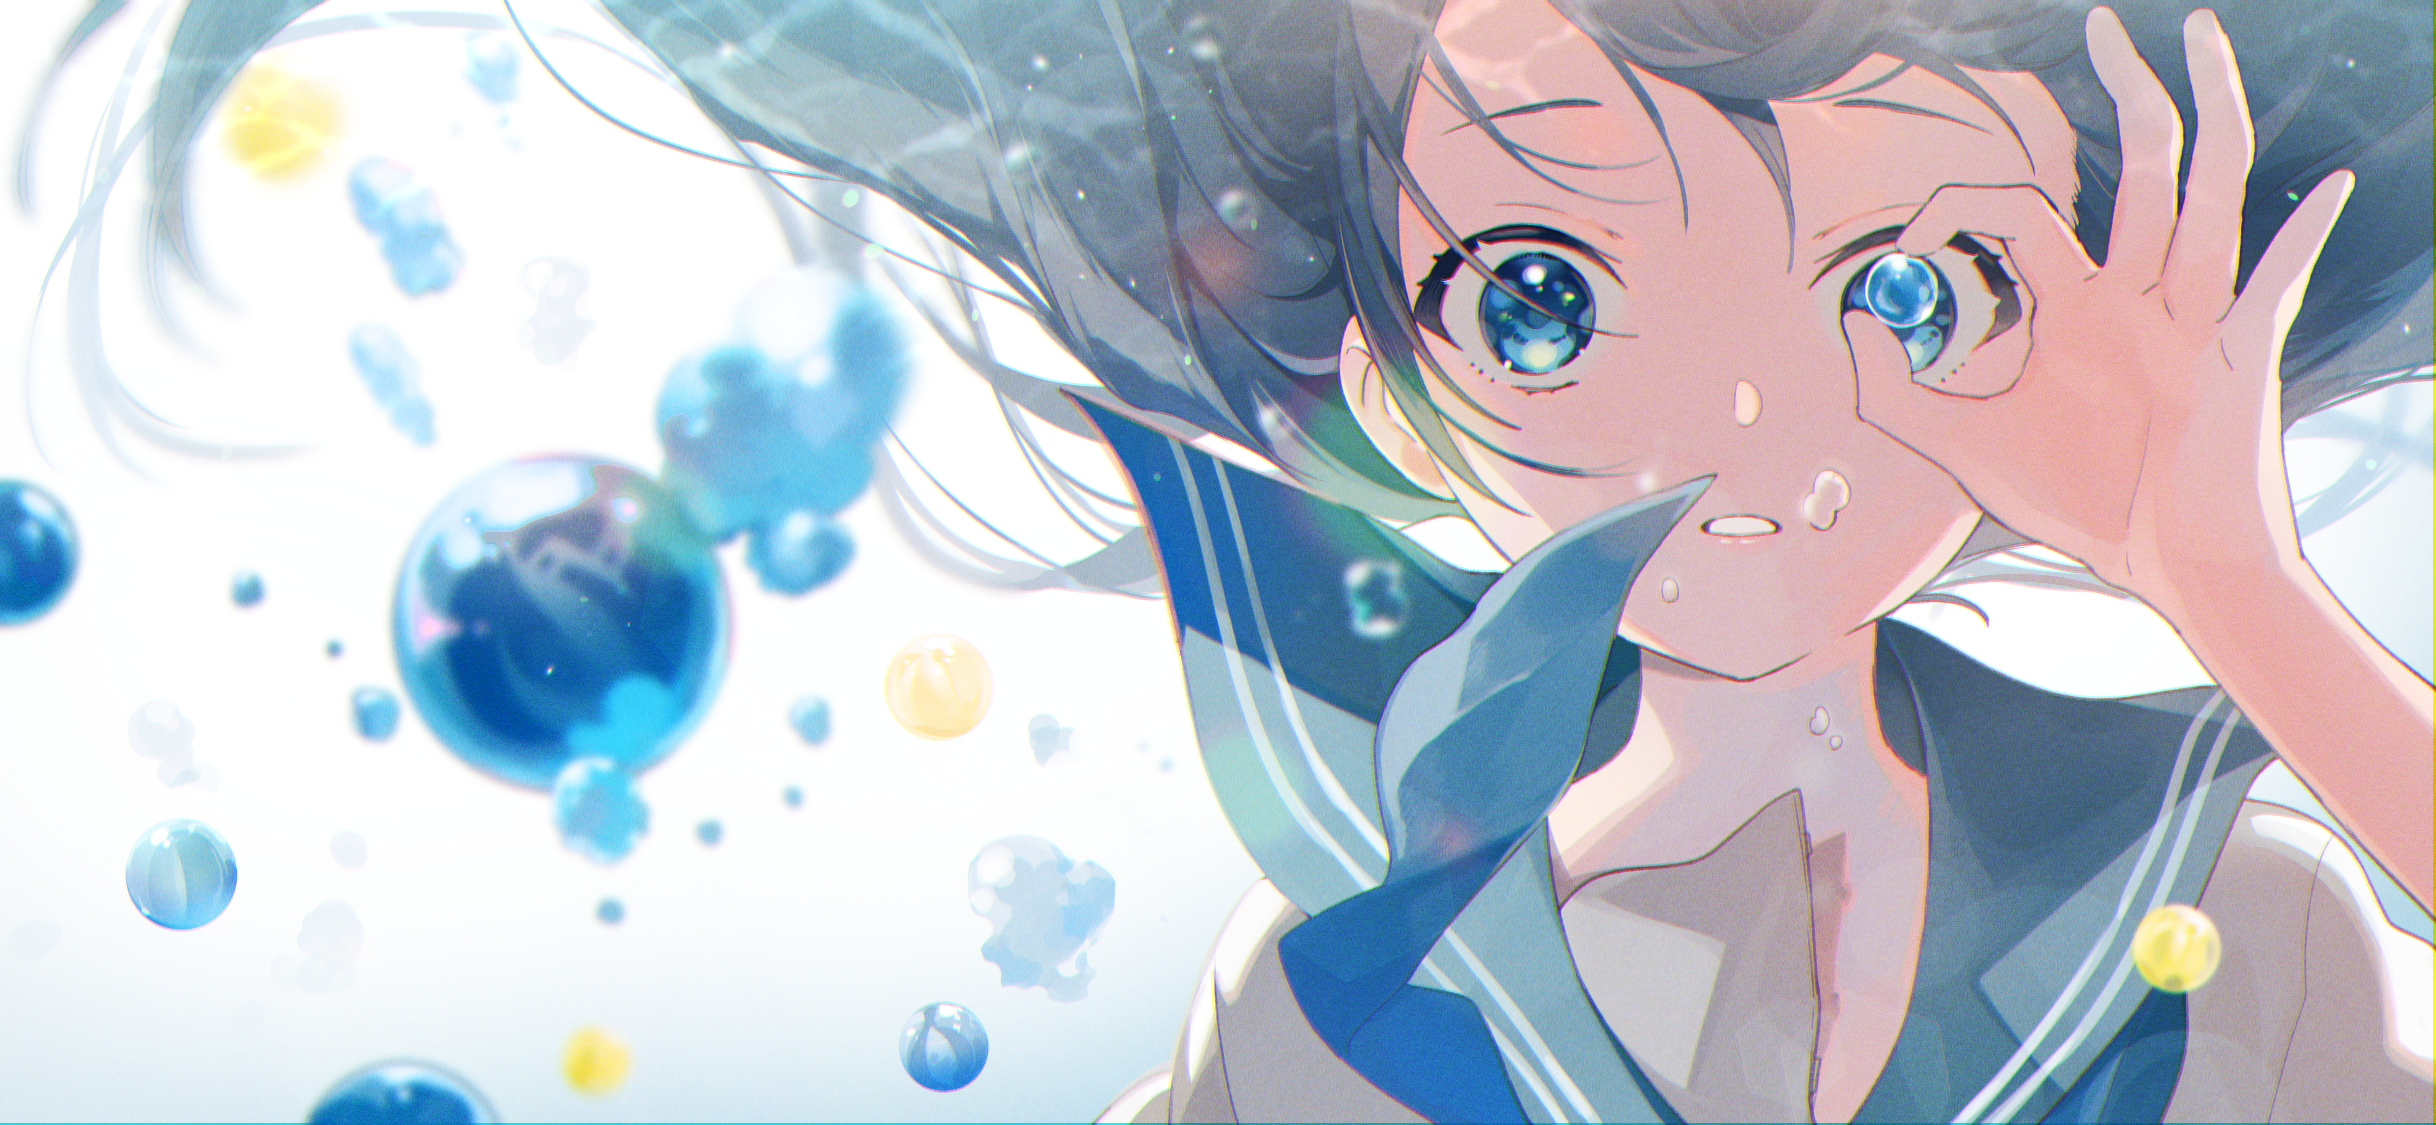 Anime 2436x1125 anime anime girls digital art artwork 2D portrait Omutatsu dark hair blue eyes school uniform